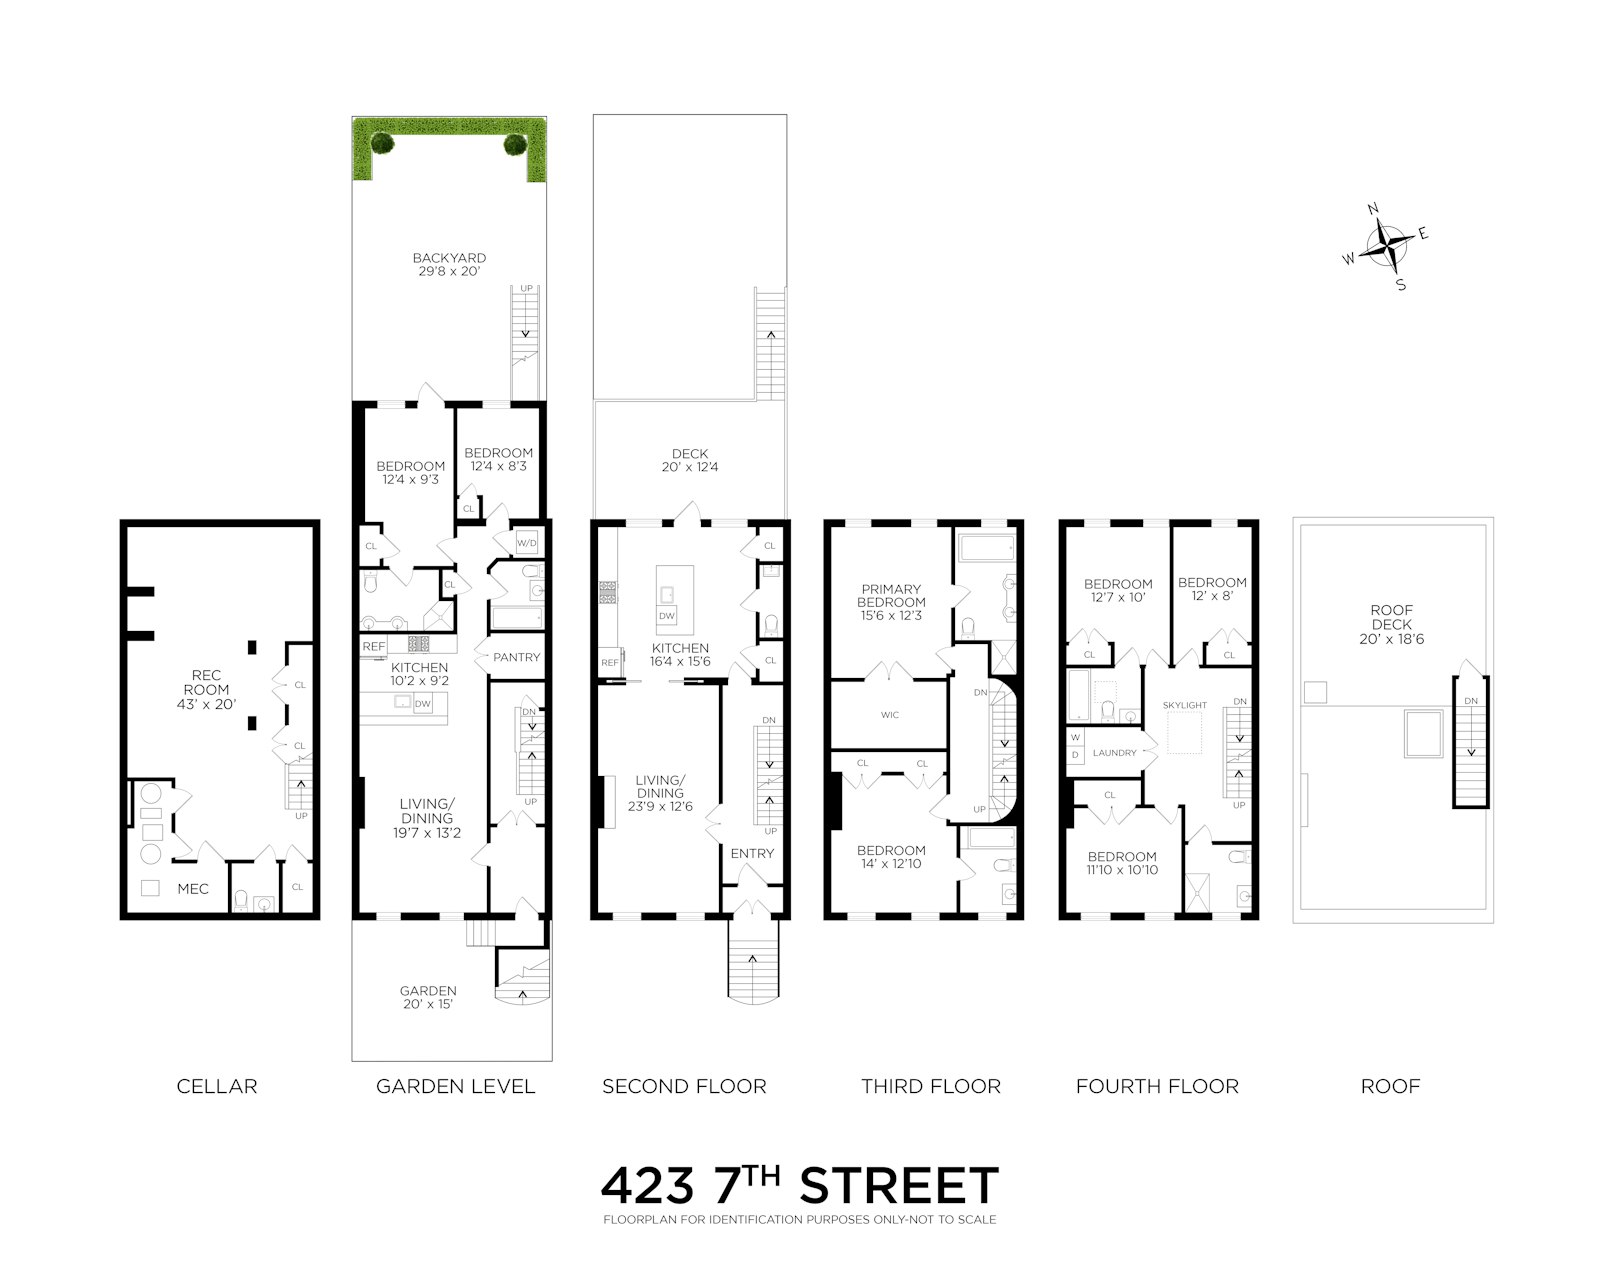 Floorplan for 423 7th Street